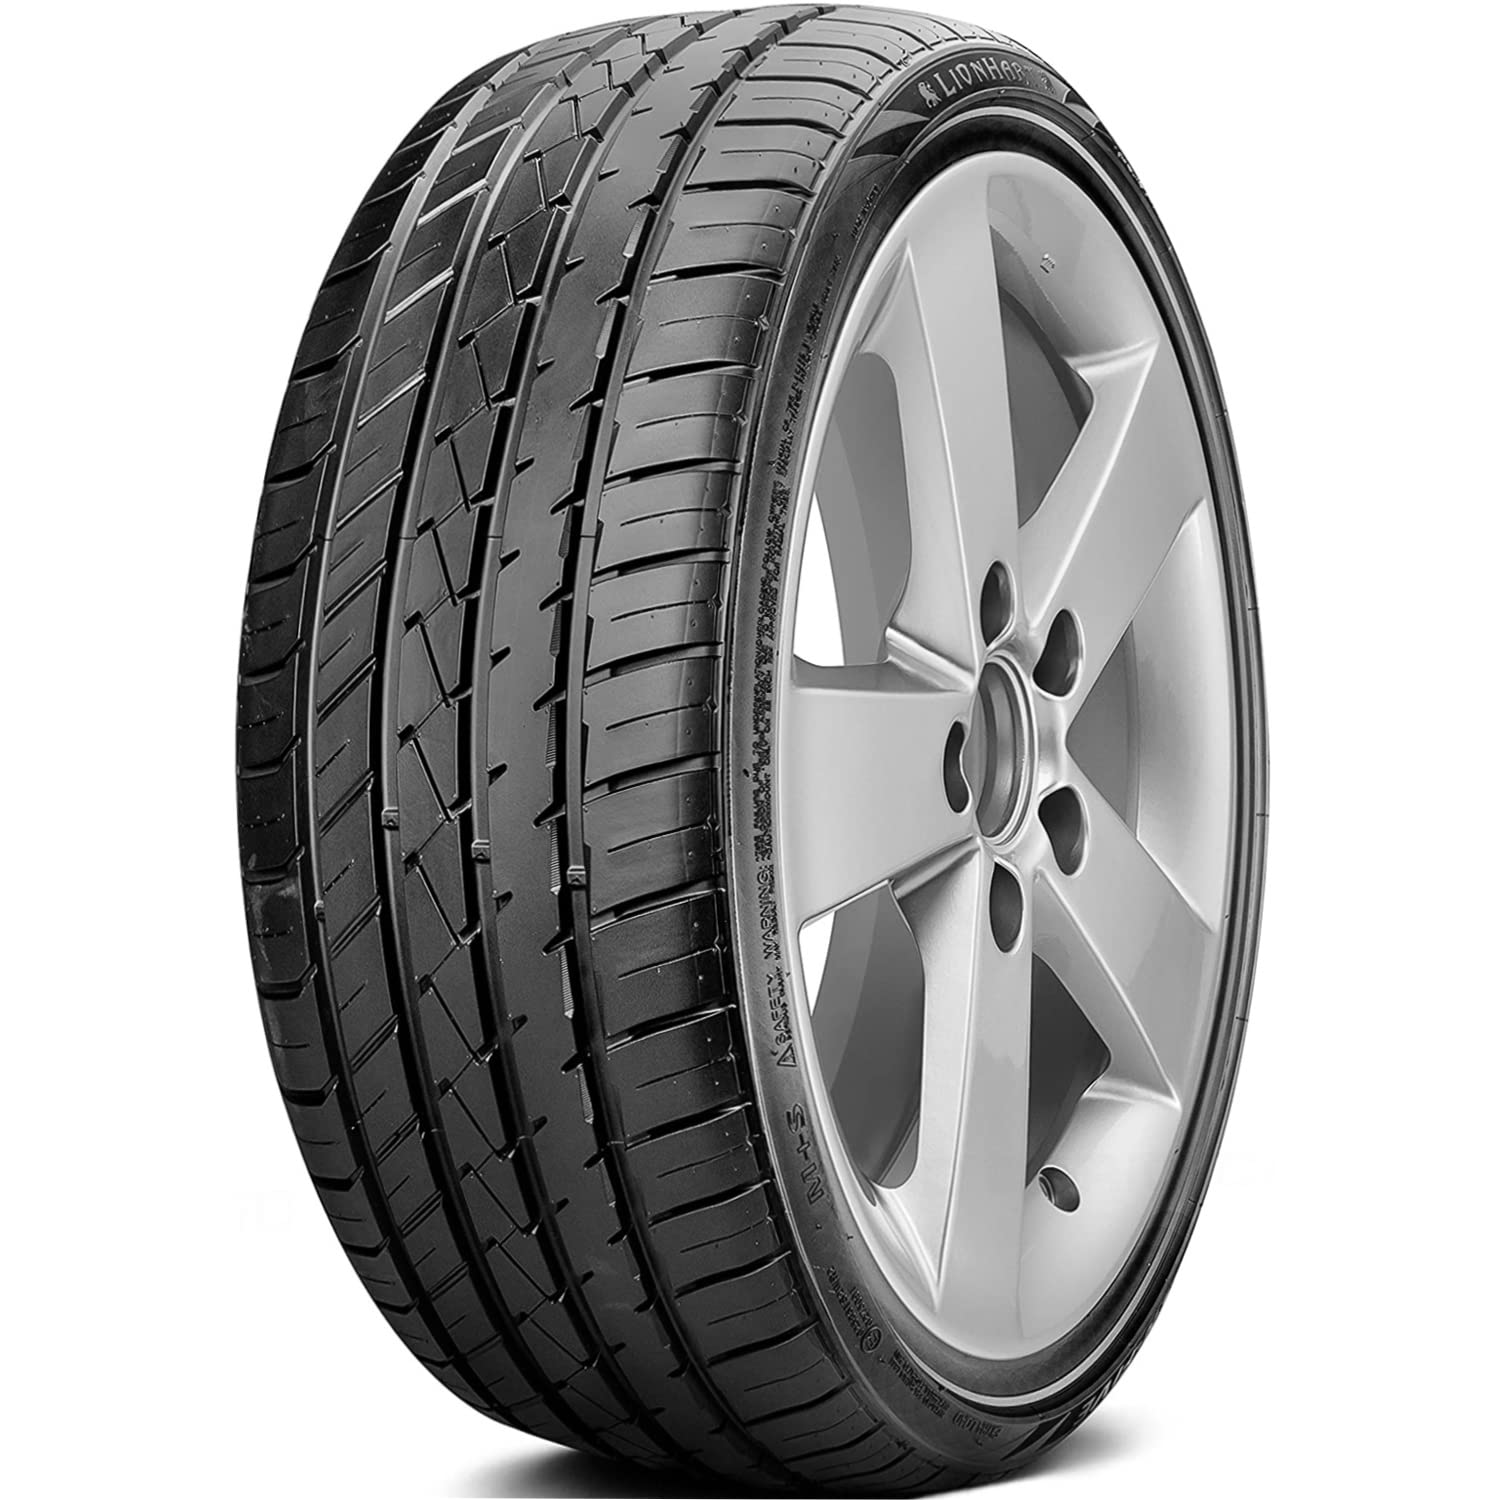 LIONHART LH-FIVE 265/40ZR22 (30.4X10.4R 22) Tires